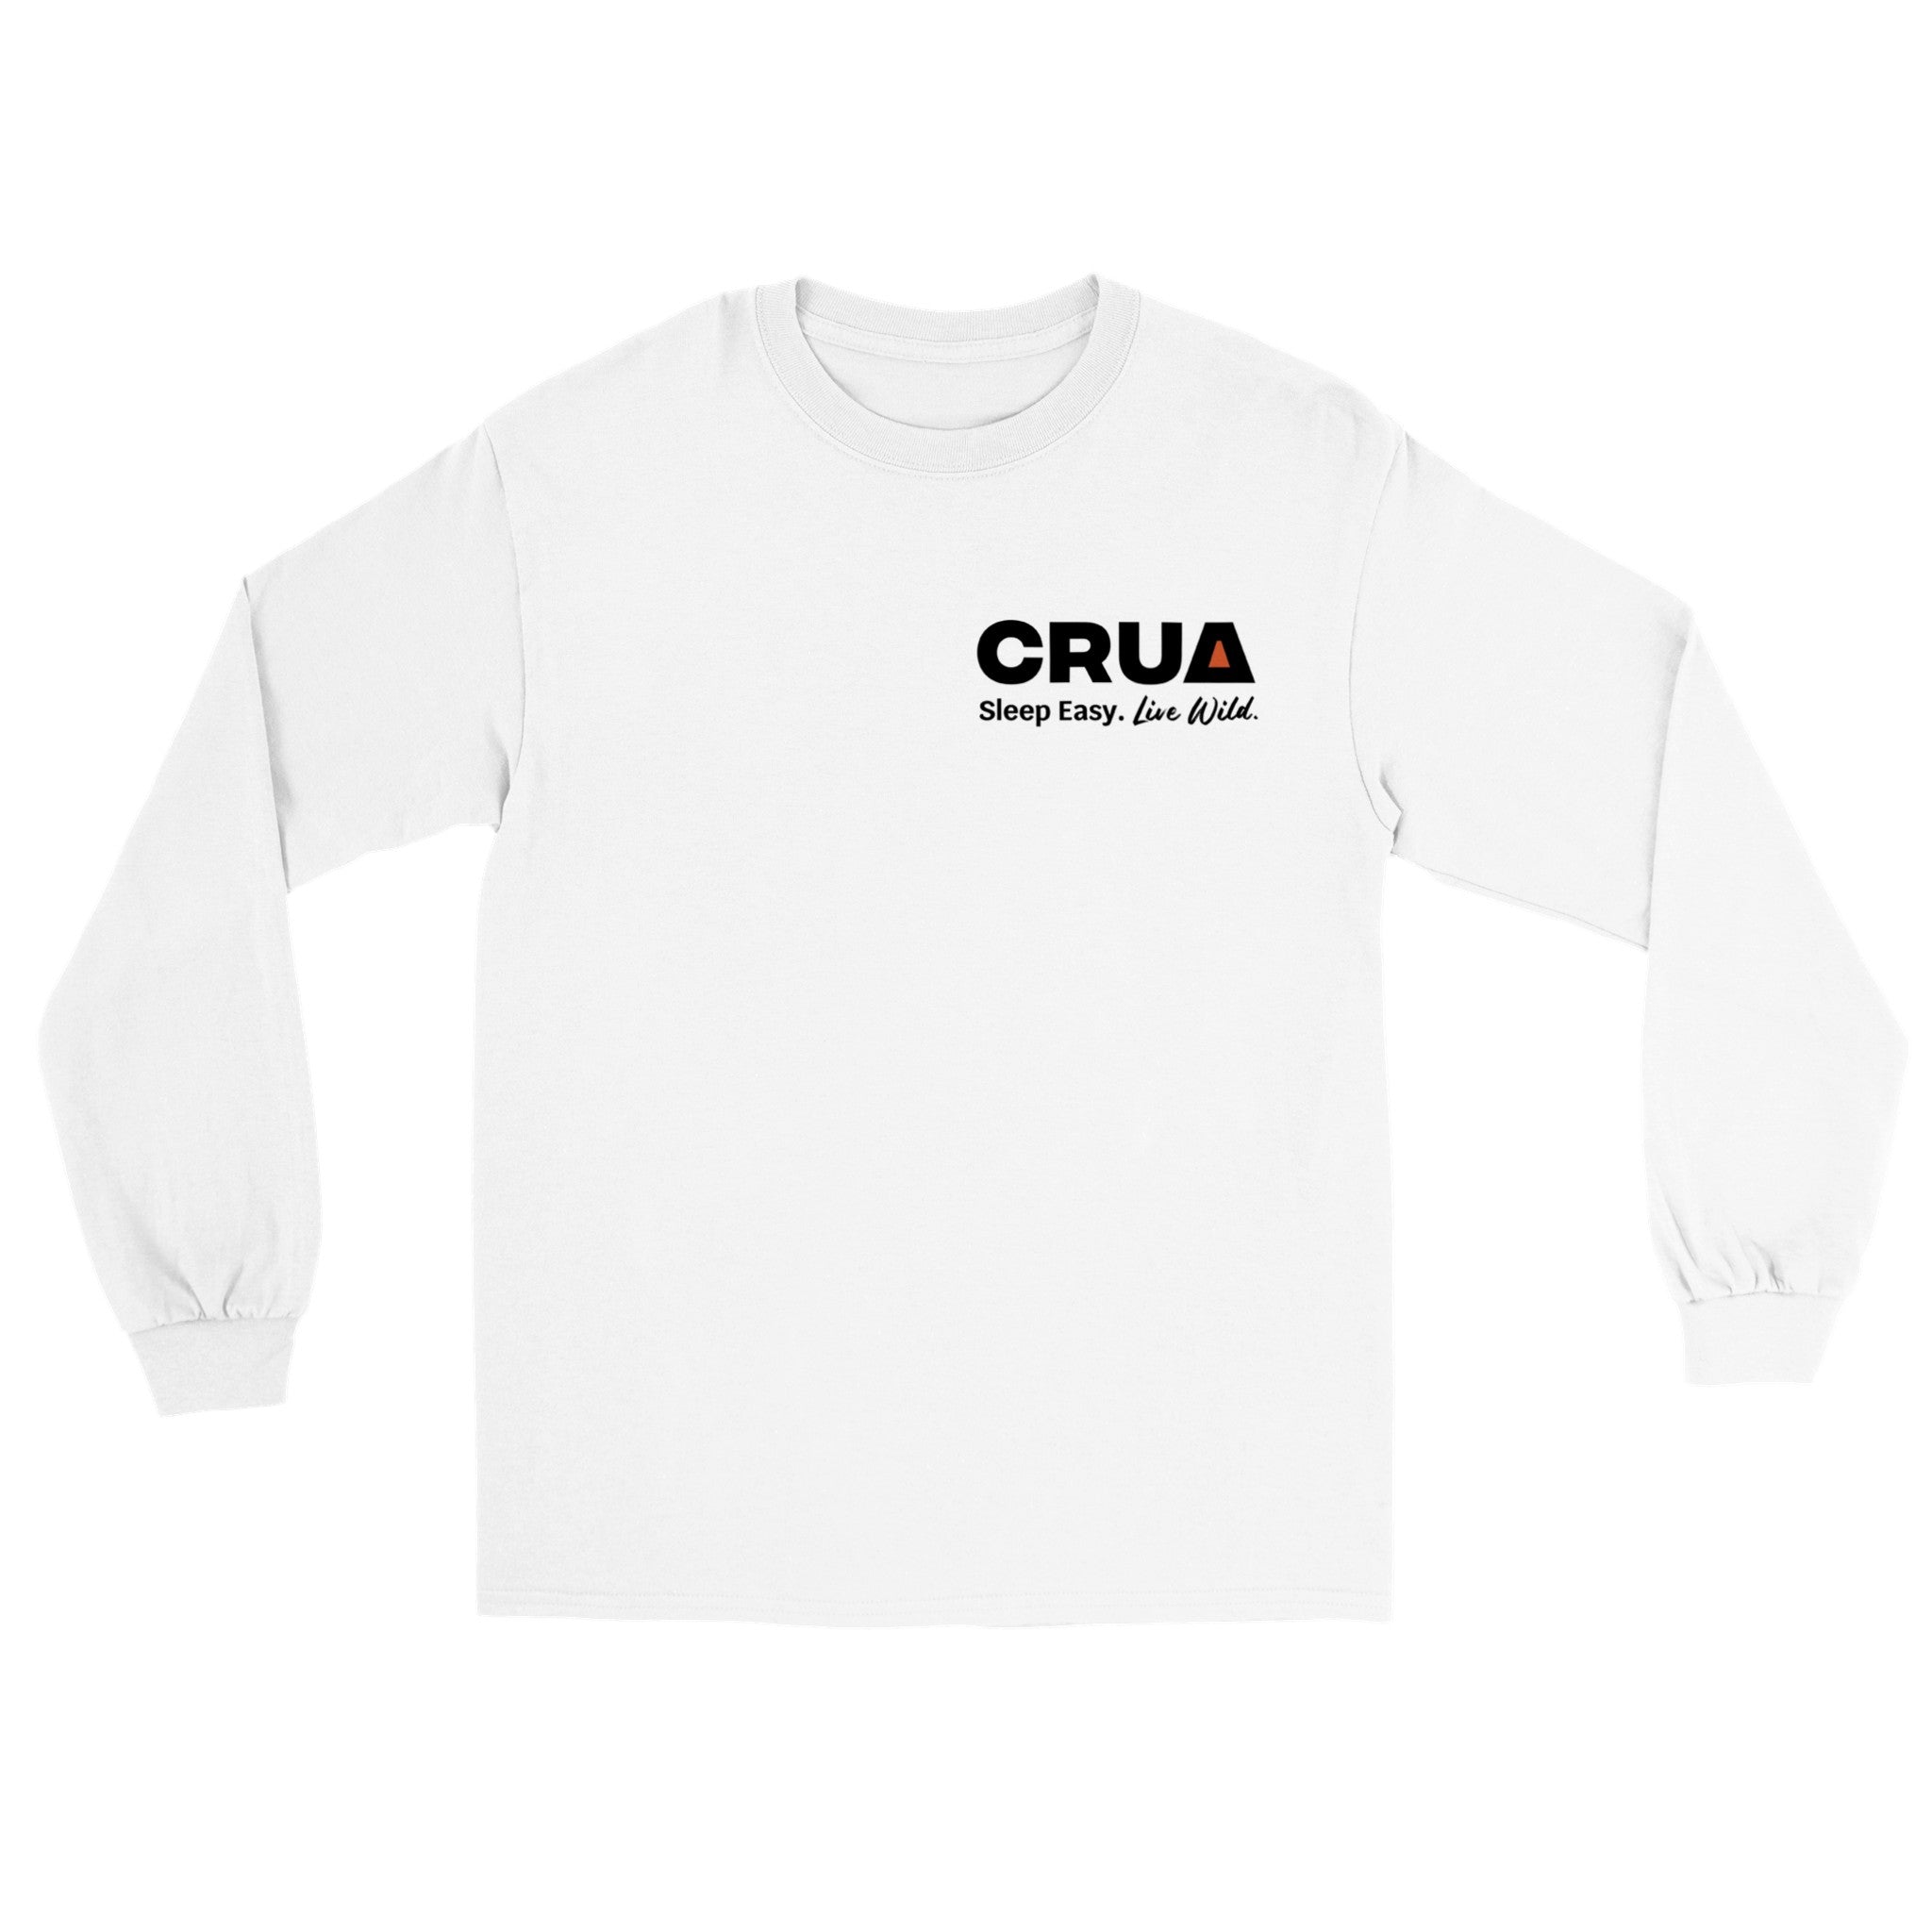 CRUA. Sleep Easy. Live Wild. Unisex Longsleeve T-Shirt